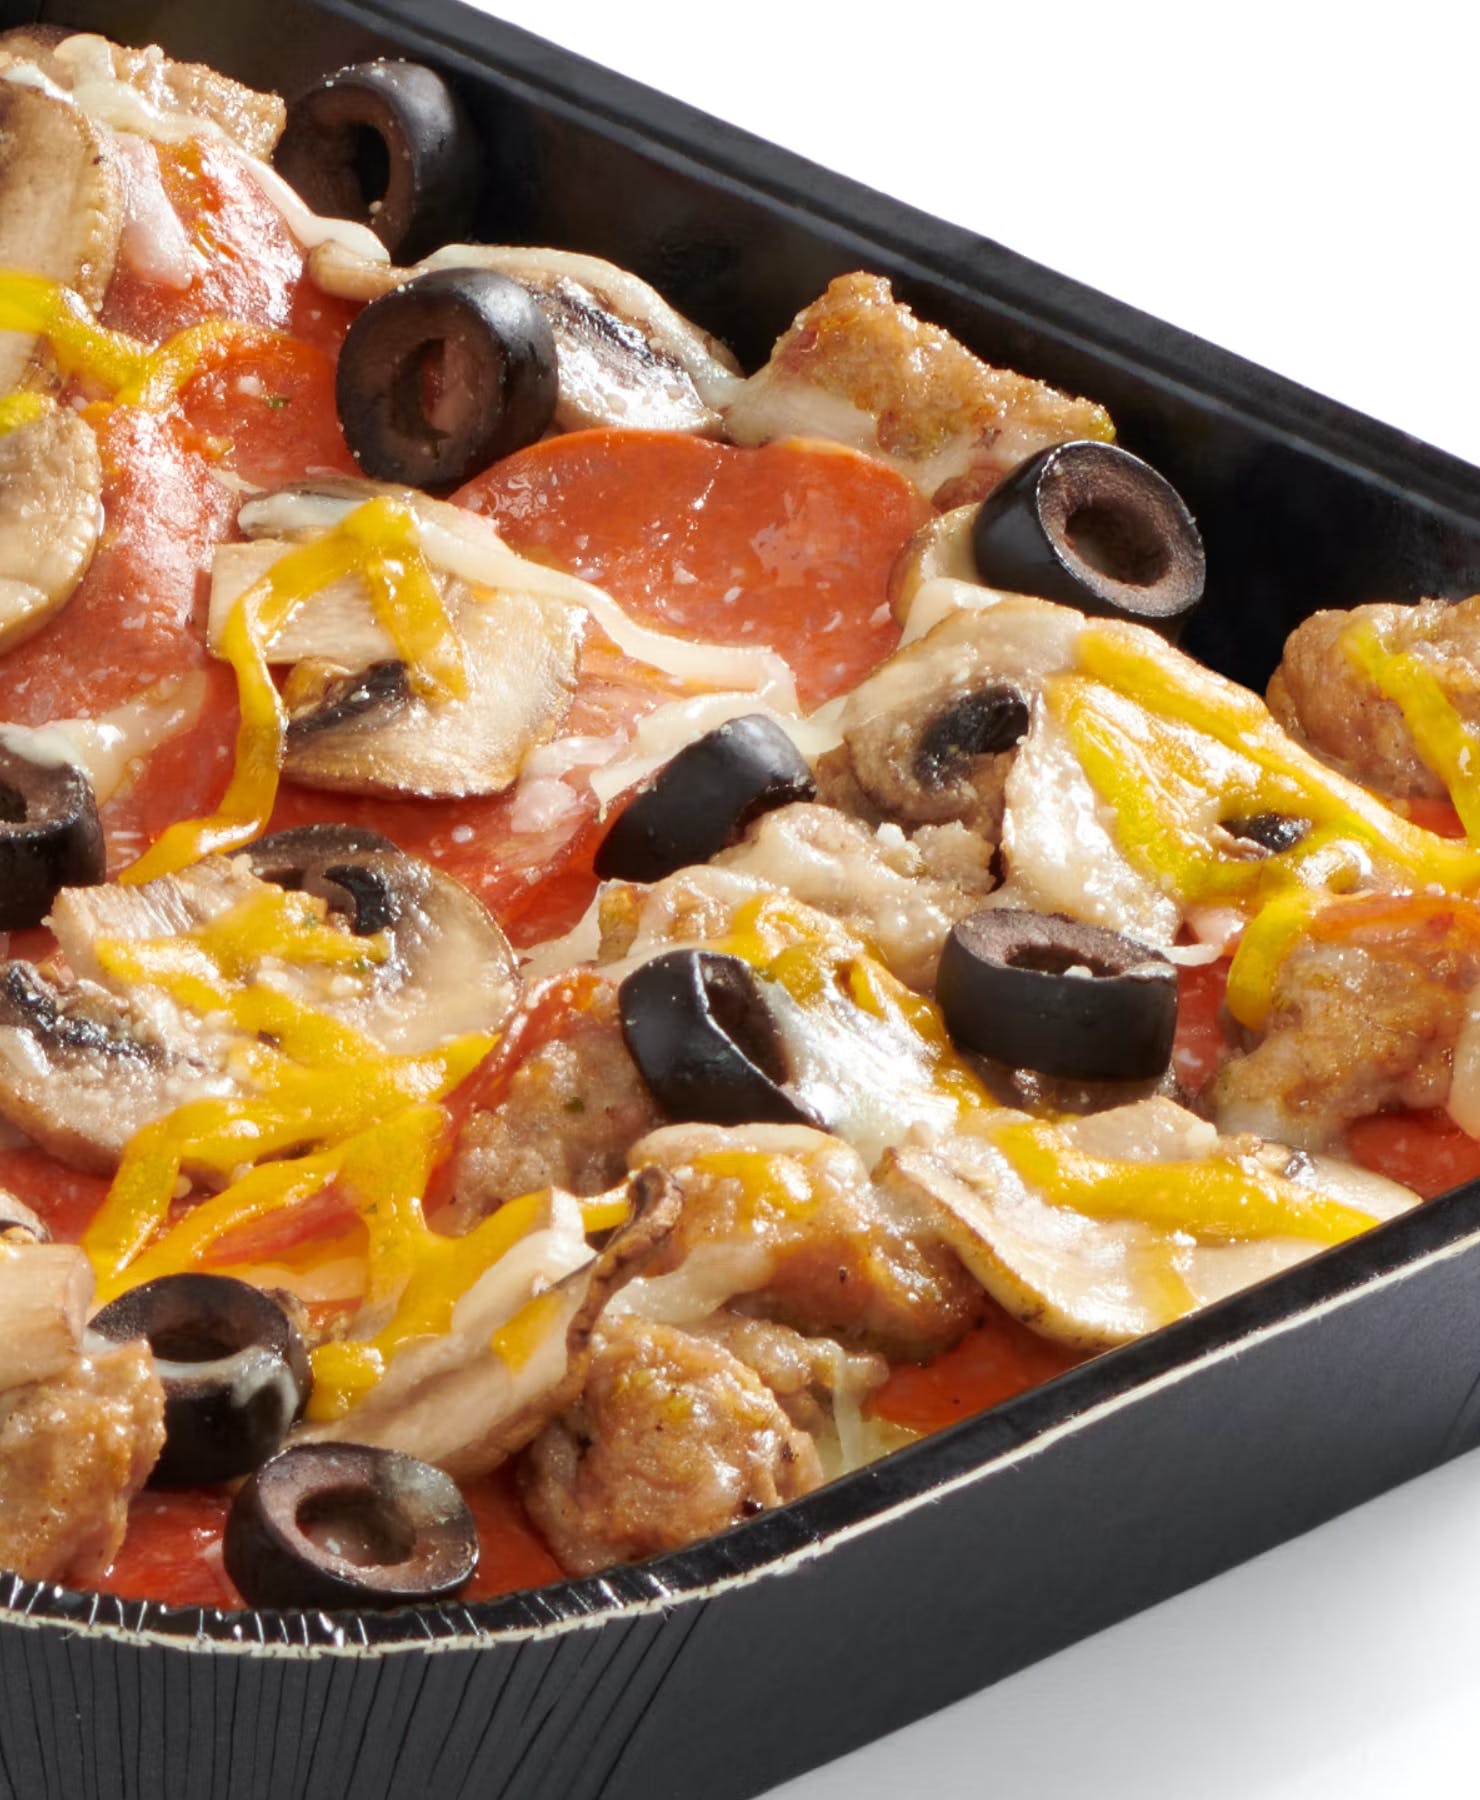 Way better than in the oven! @Papa Murphys #pizzahack #papamurphys #gr